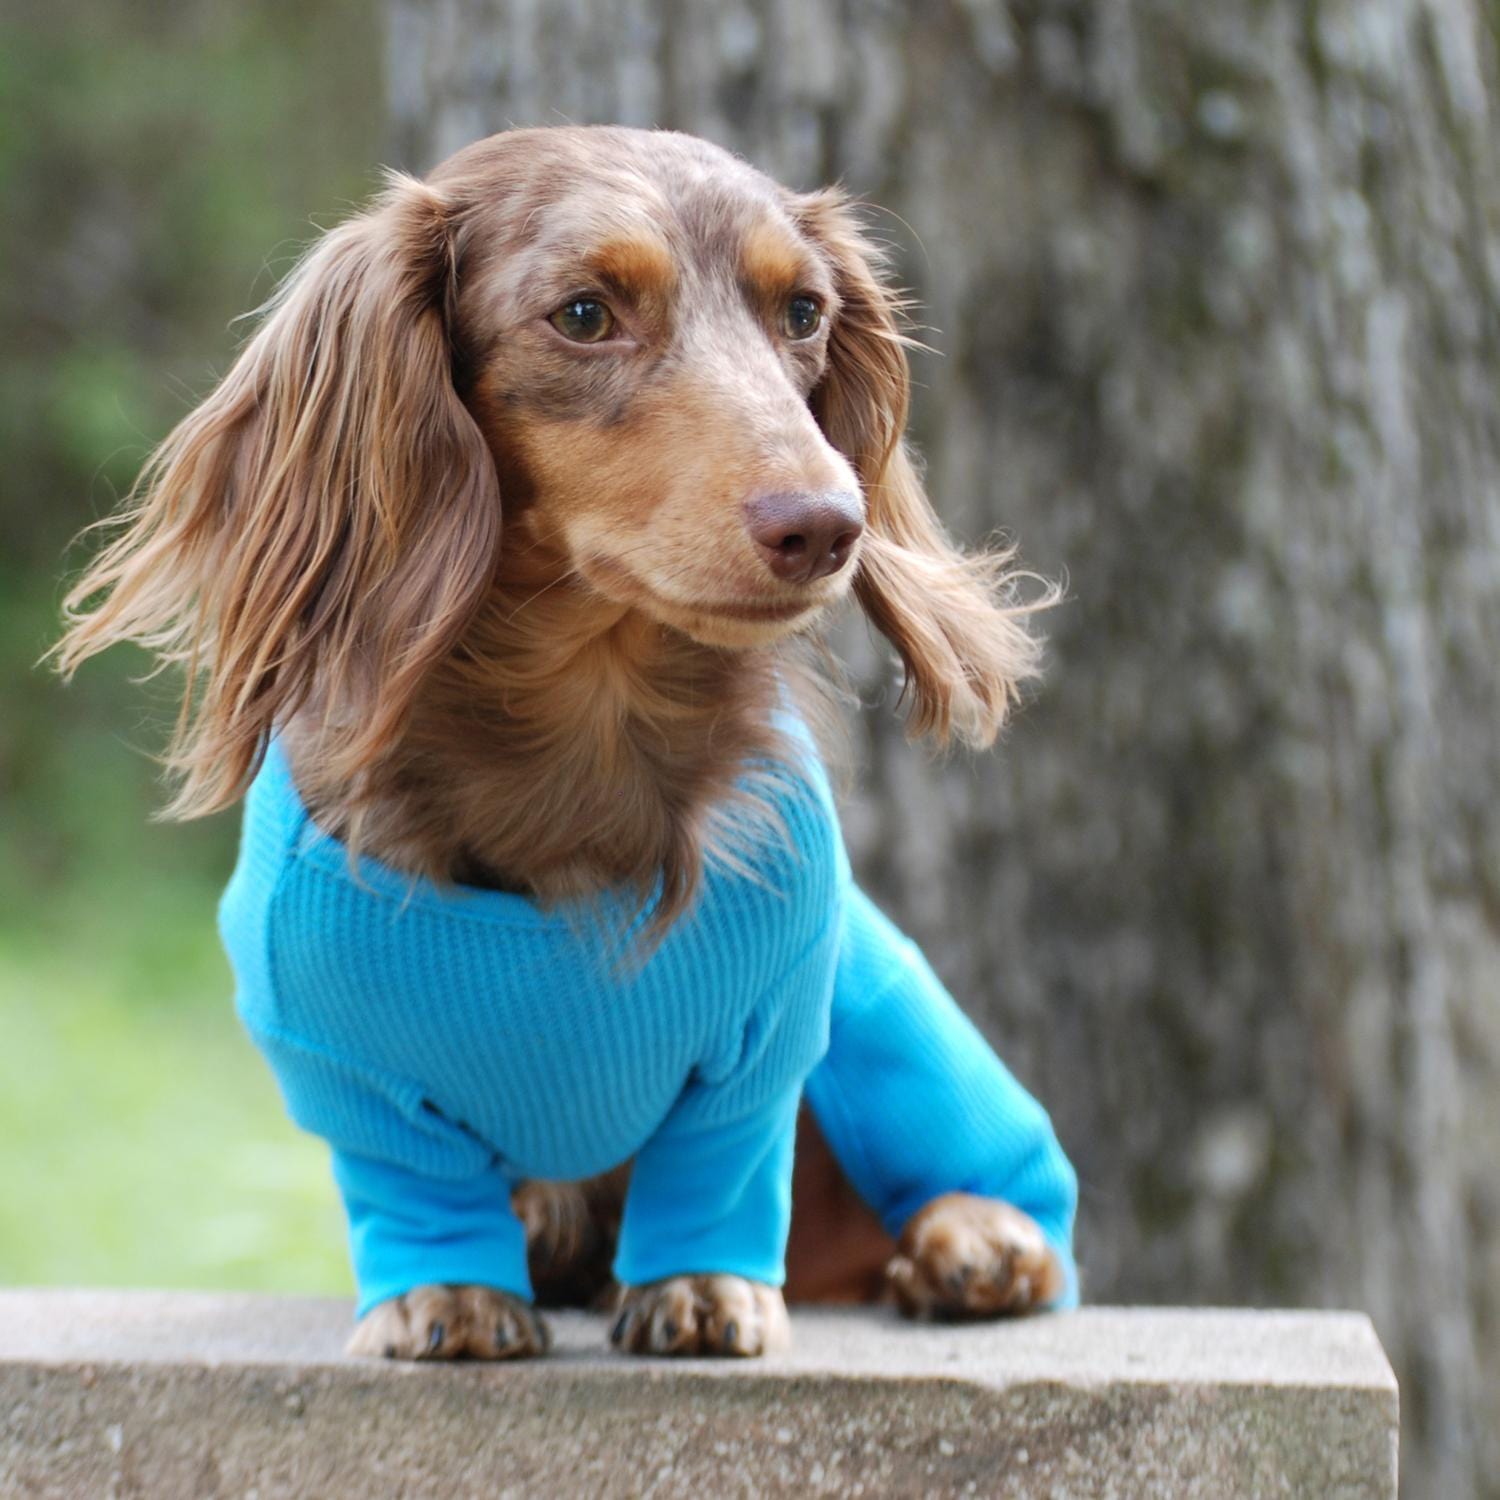 Dog Pajamas - 100% Cotton for Small Dogs